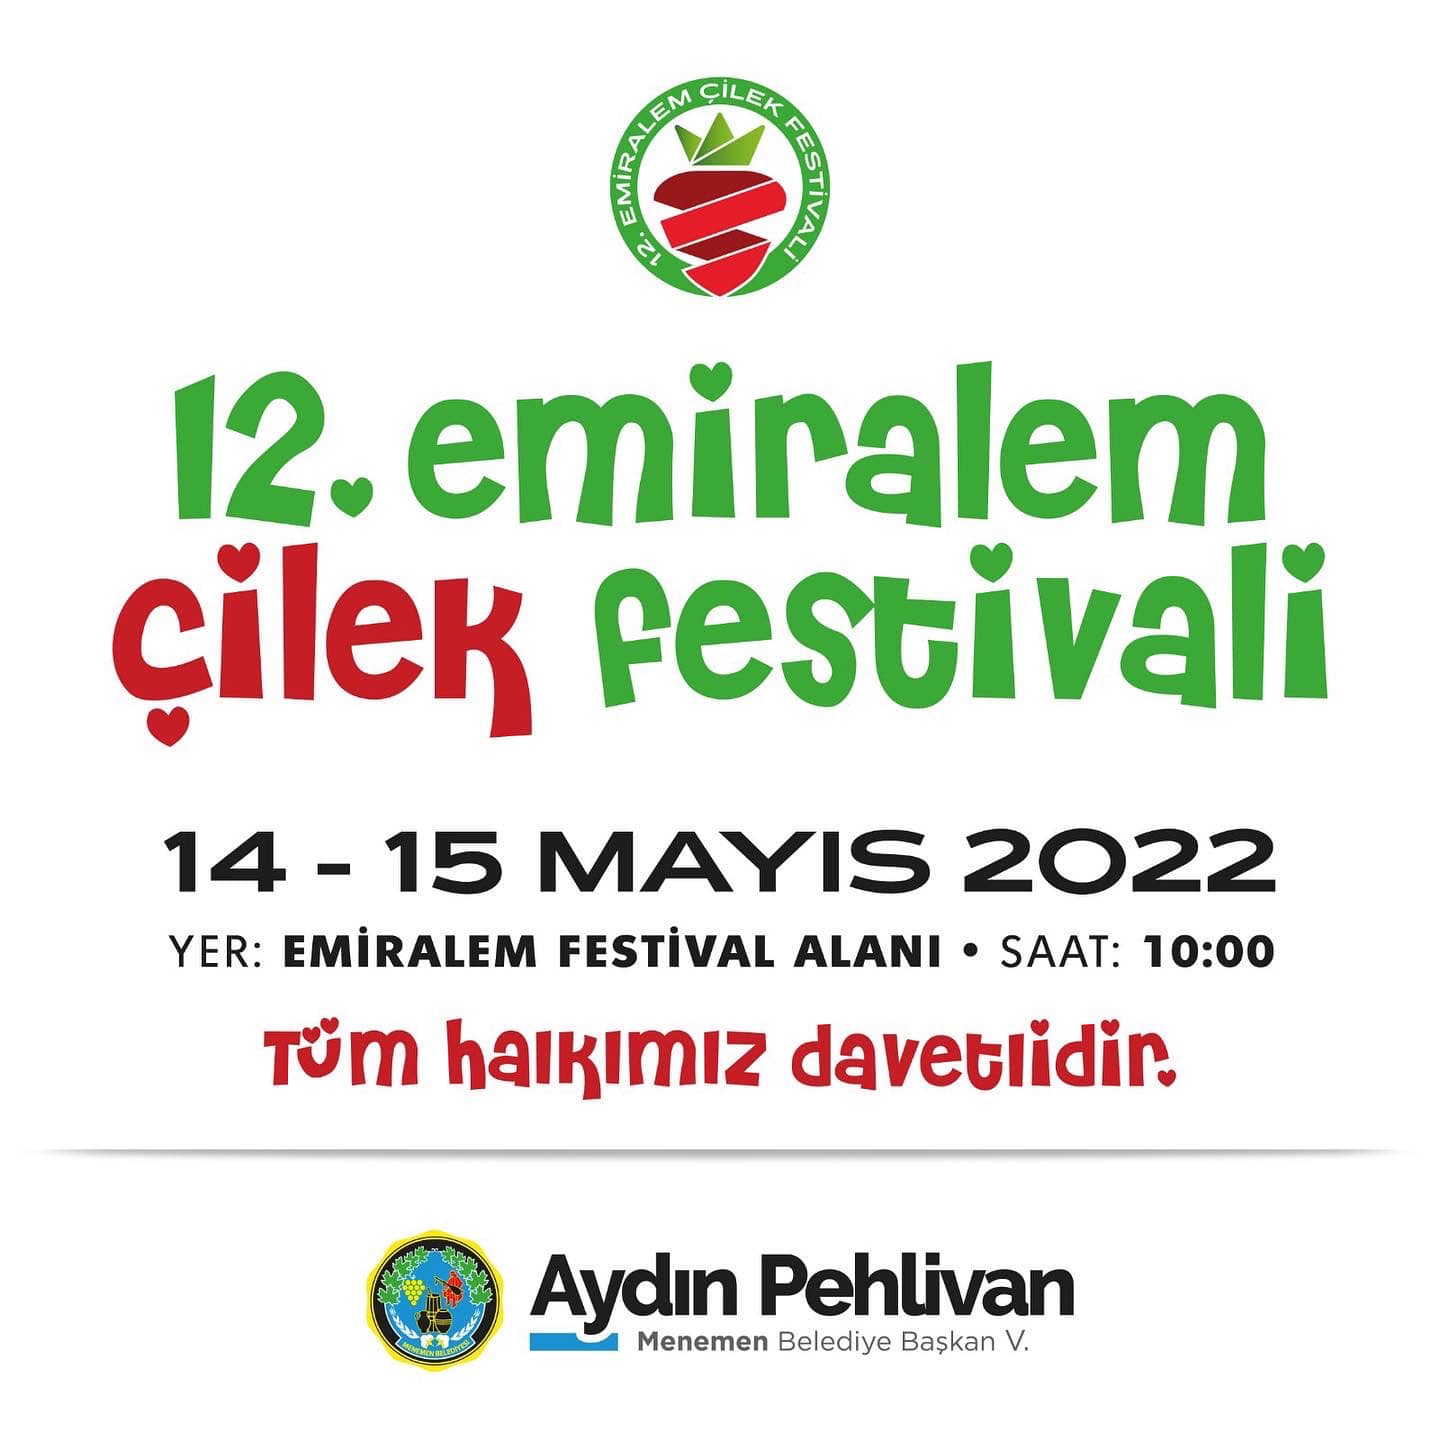 emiralem-cilek-festivali-897